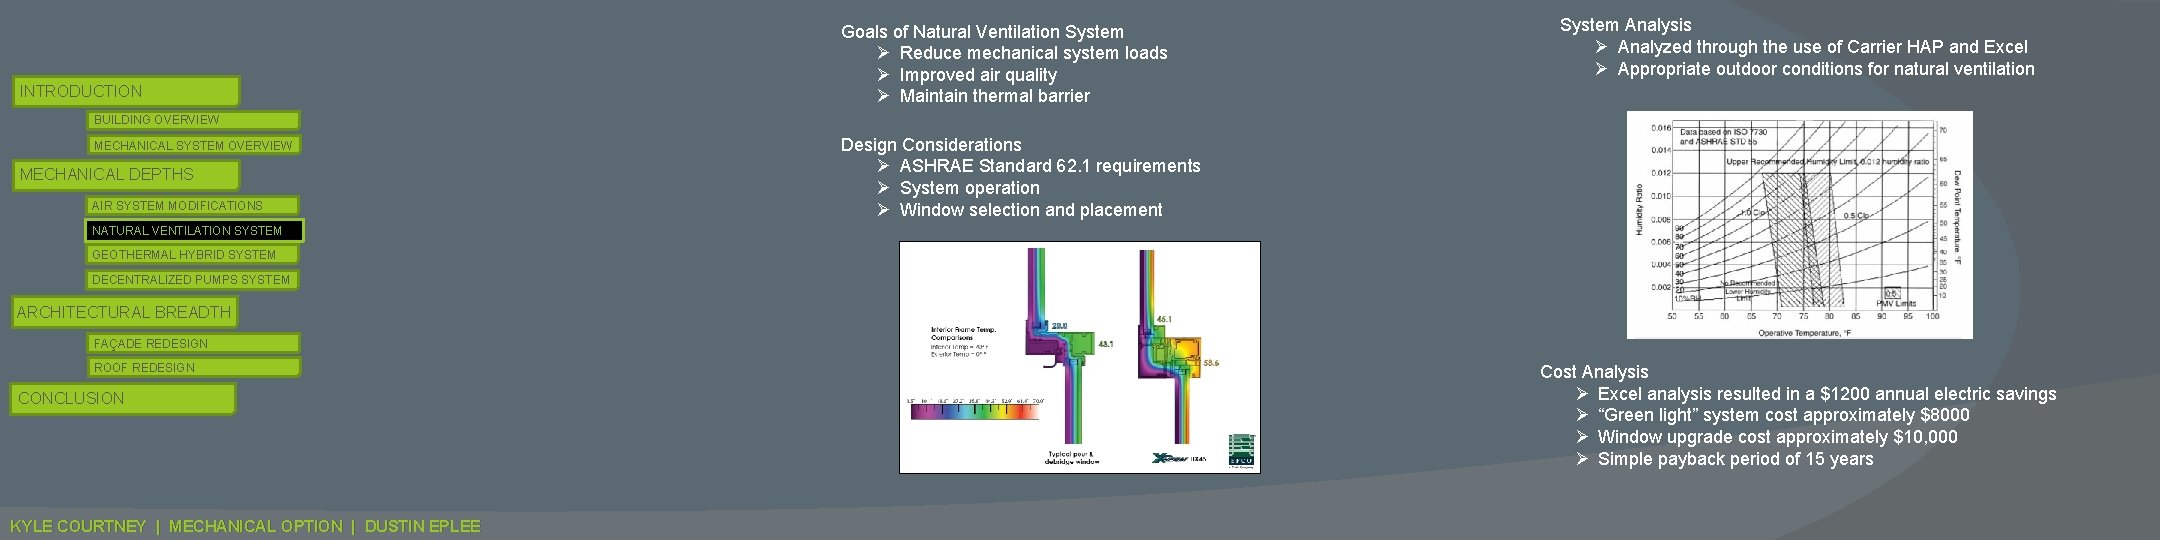 INTRODUCTION Goals of Natural Ventilation System Ø Reduce mechanical system loads Ø Improved air